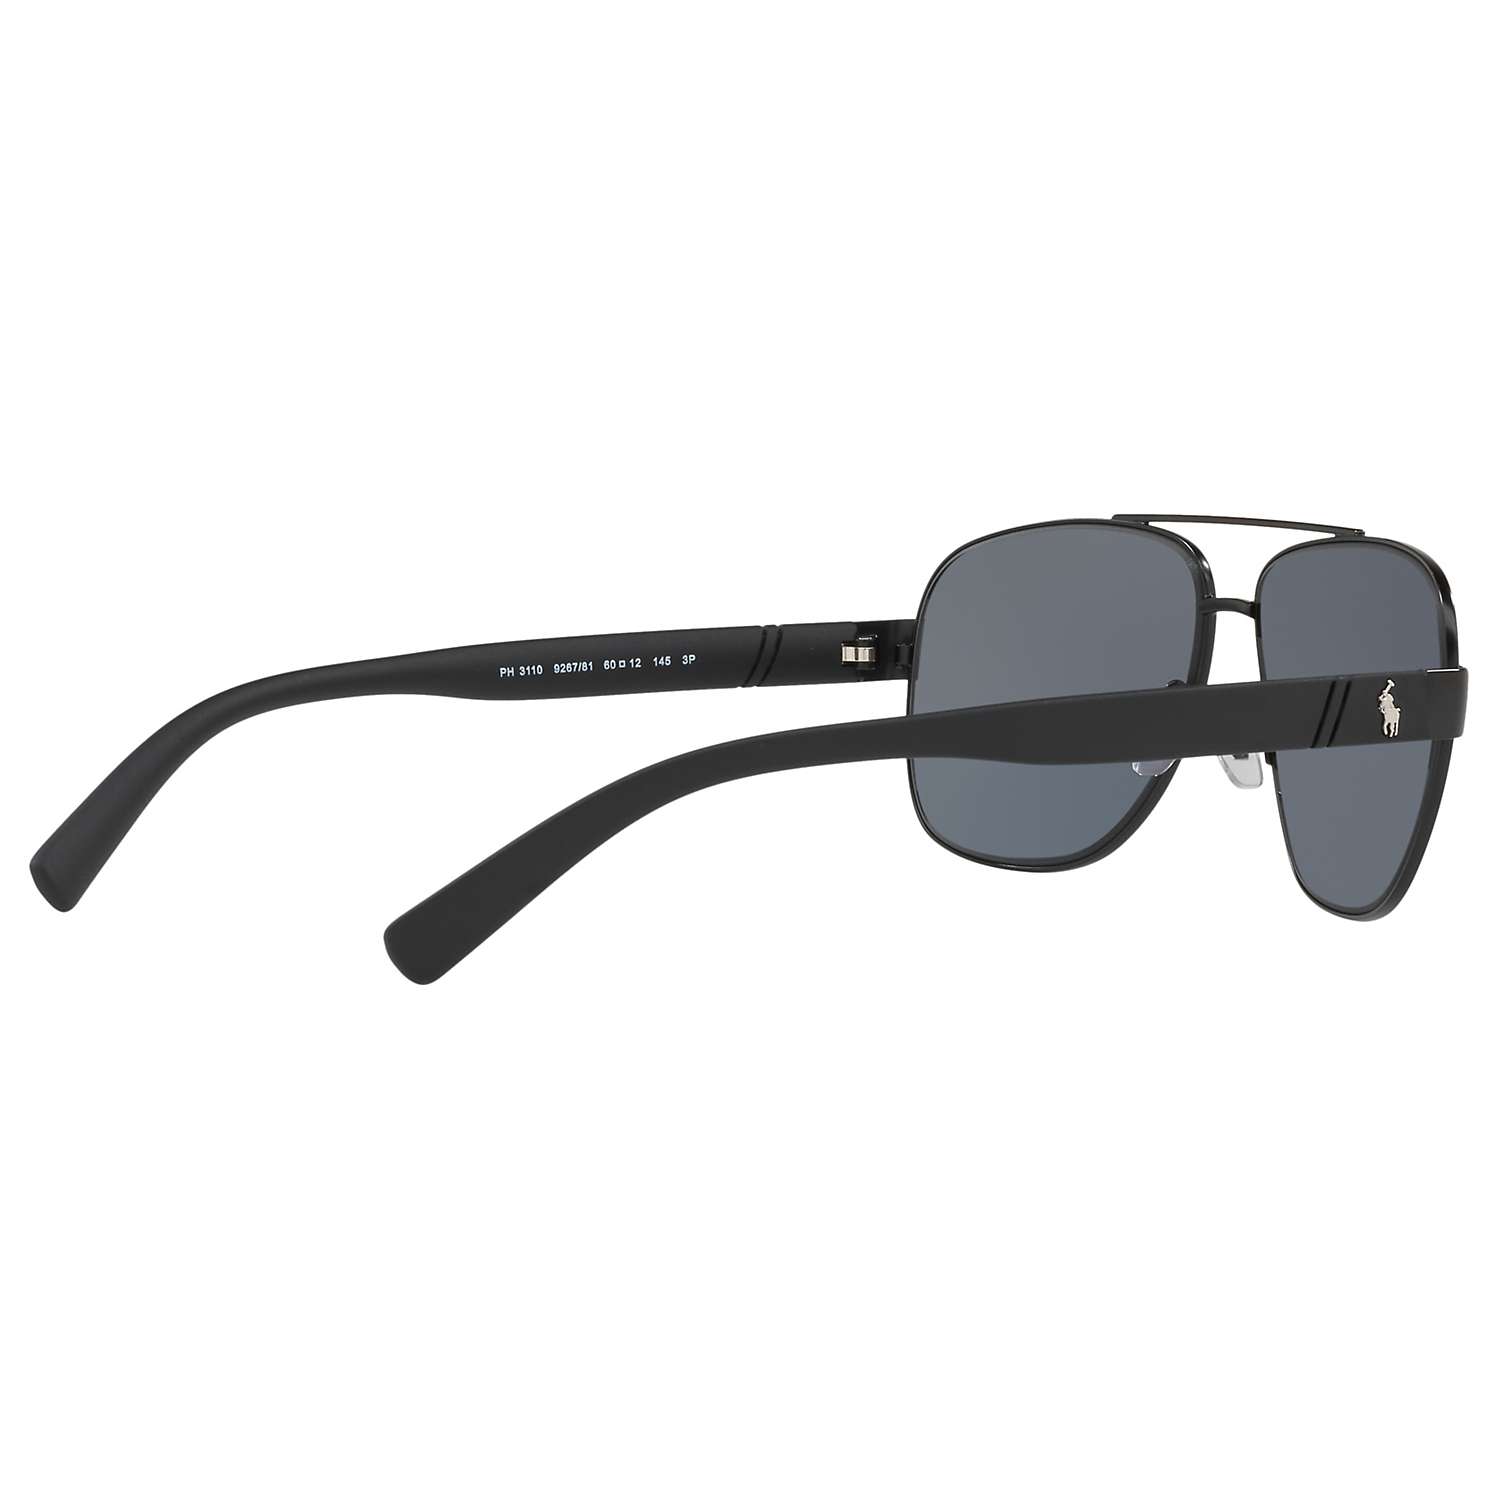 Buy Polo Ralph Lauren PH3110 Men's Polarised Aviator Sunglasses, Black/Grey Online at johnlewis.com